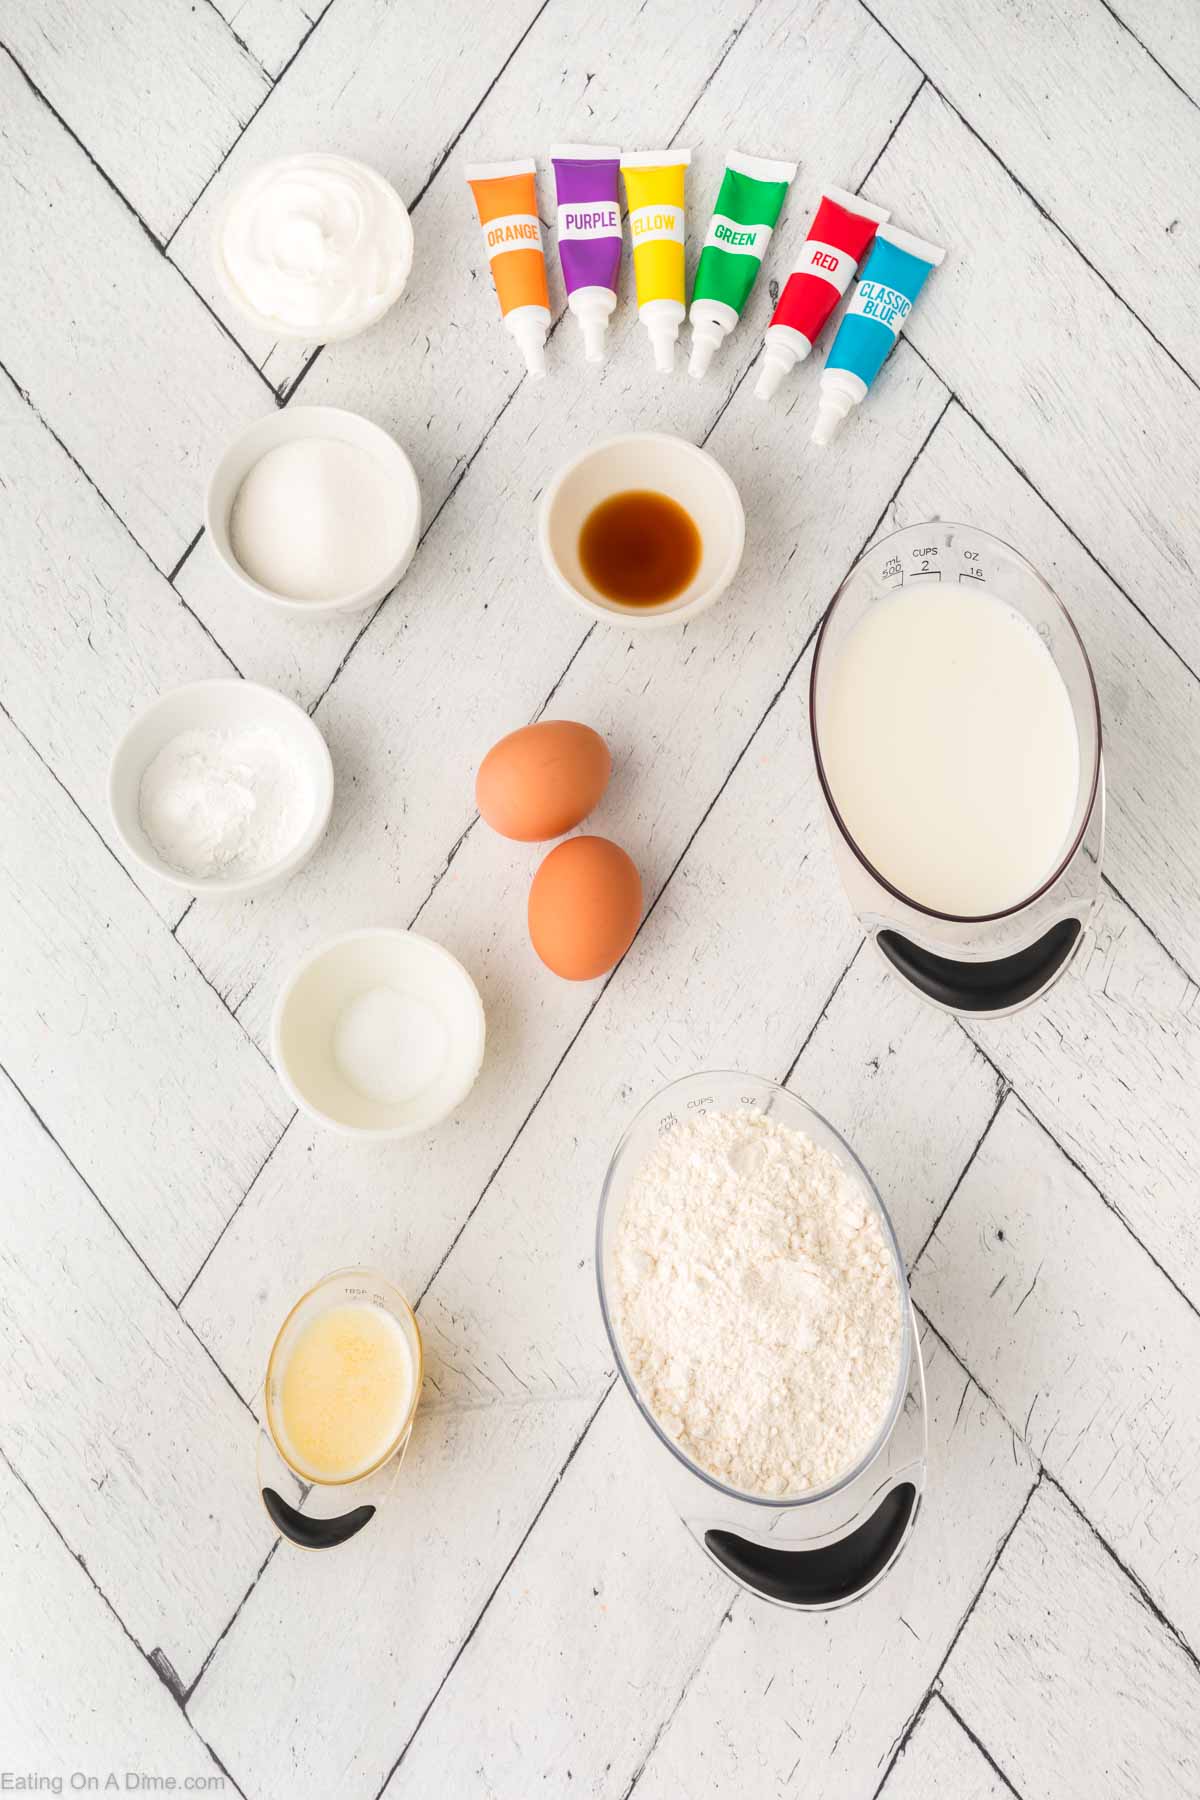 Rainbow pancakes ingredients - flour, sugar, baking powder, salt, eggs, milk, butter, vanilla extract, food coloring, whipped cream